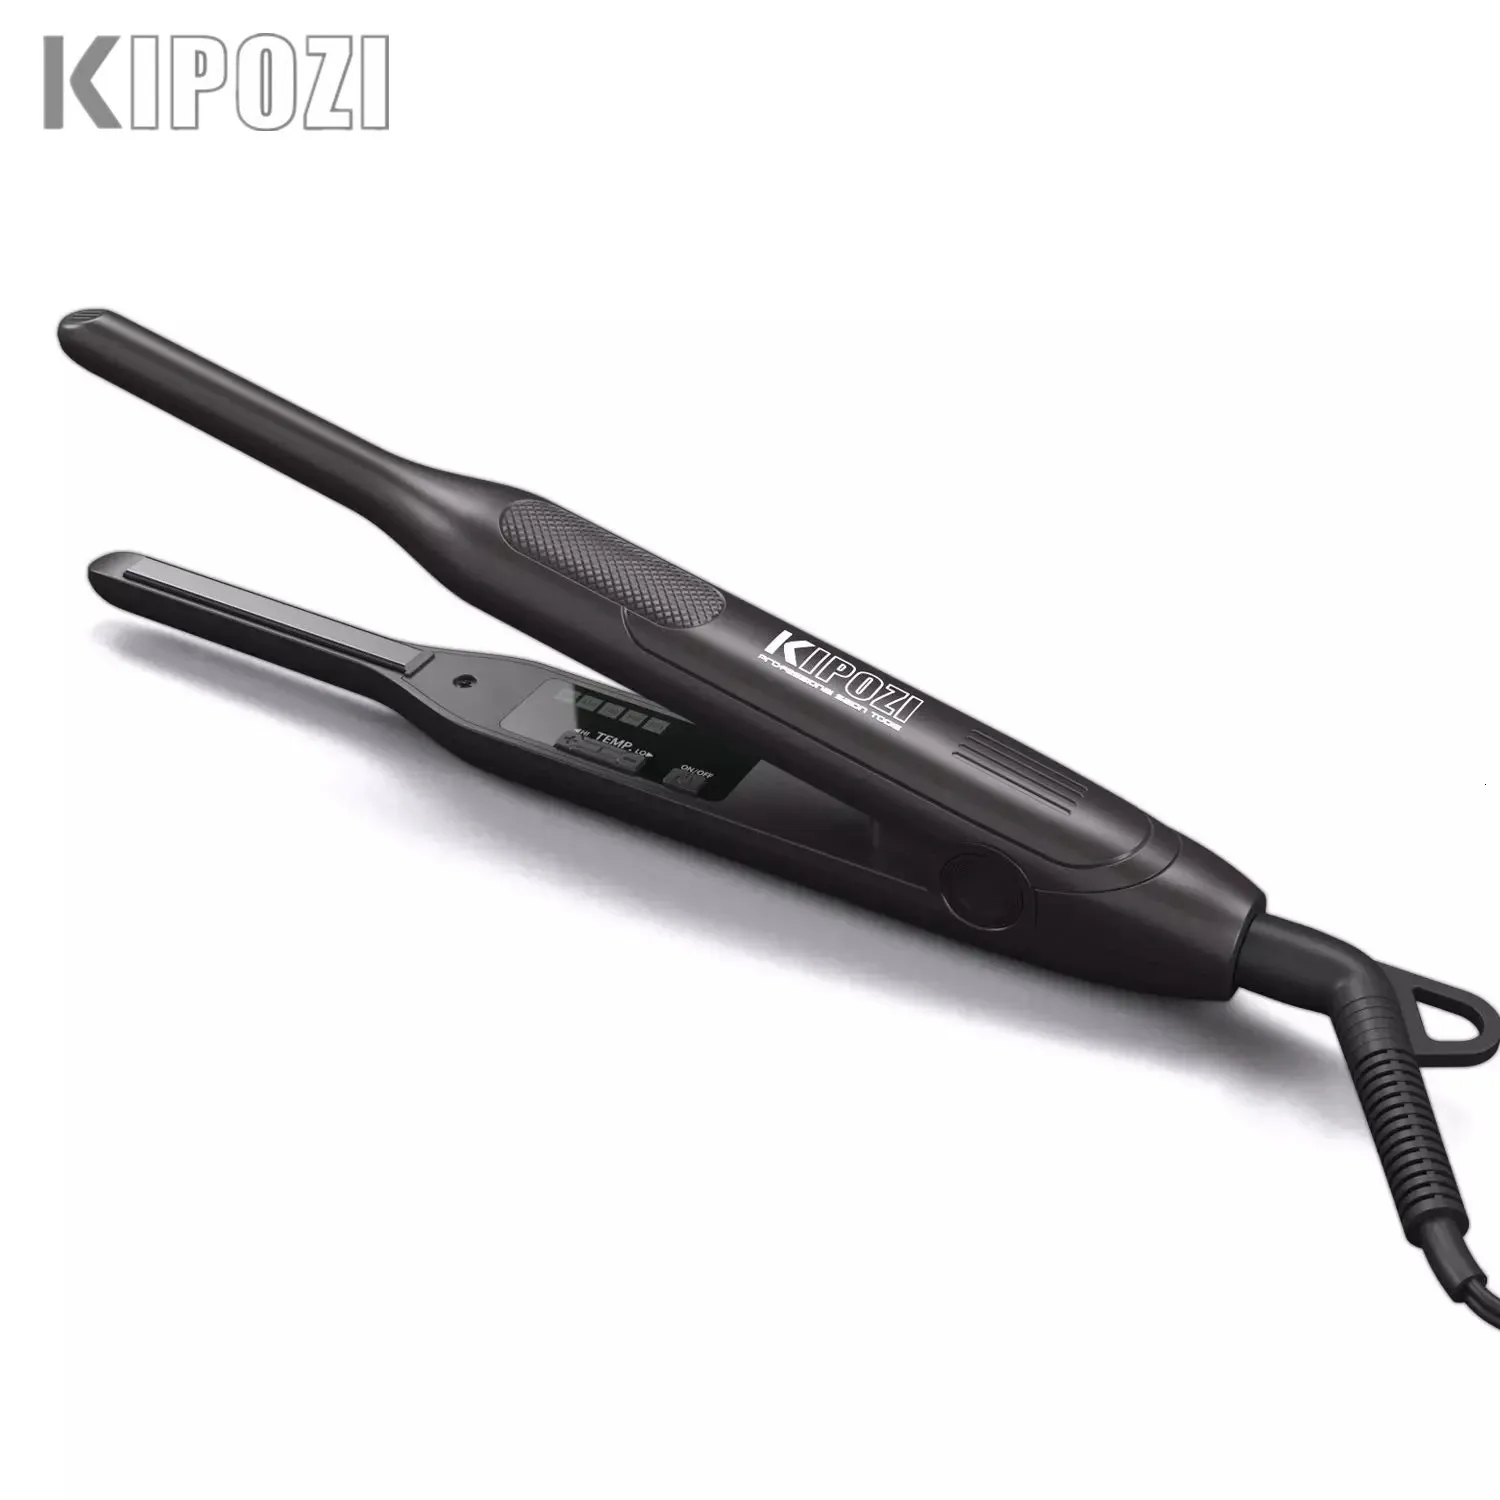 Kipozi Small Hair Straightener Short Hair Pixue Cut Dual Voltage平らな髪の鉄薄鉛筆ひげストレートナー240131